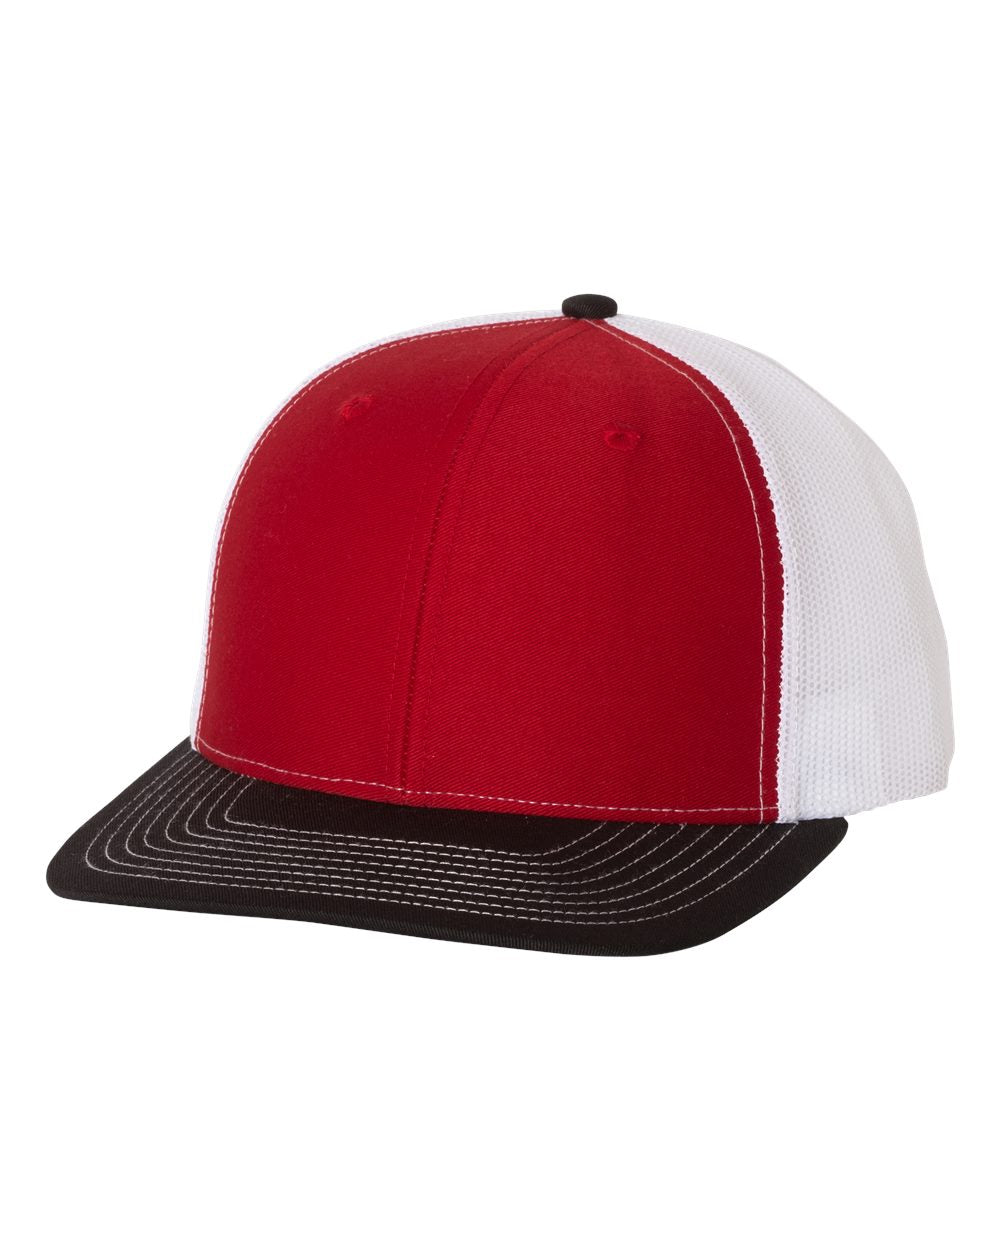 richardson cap red white black